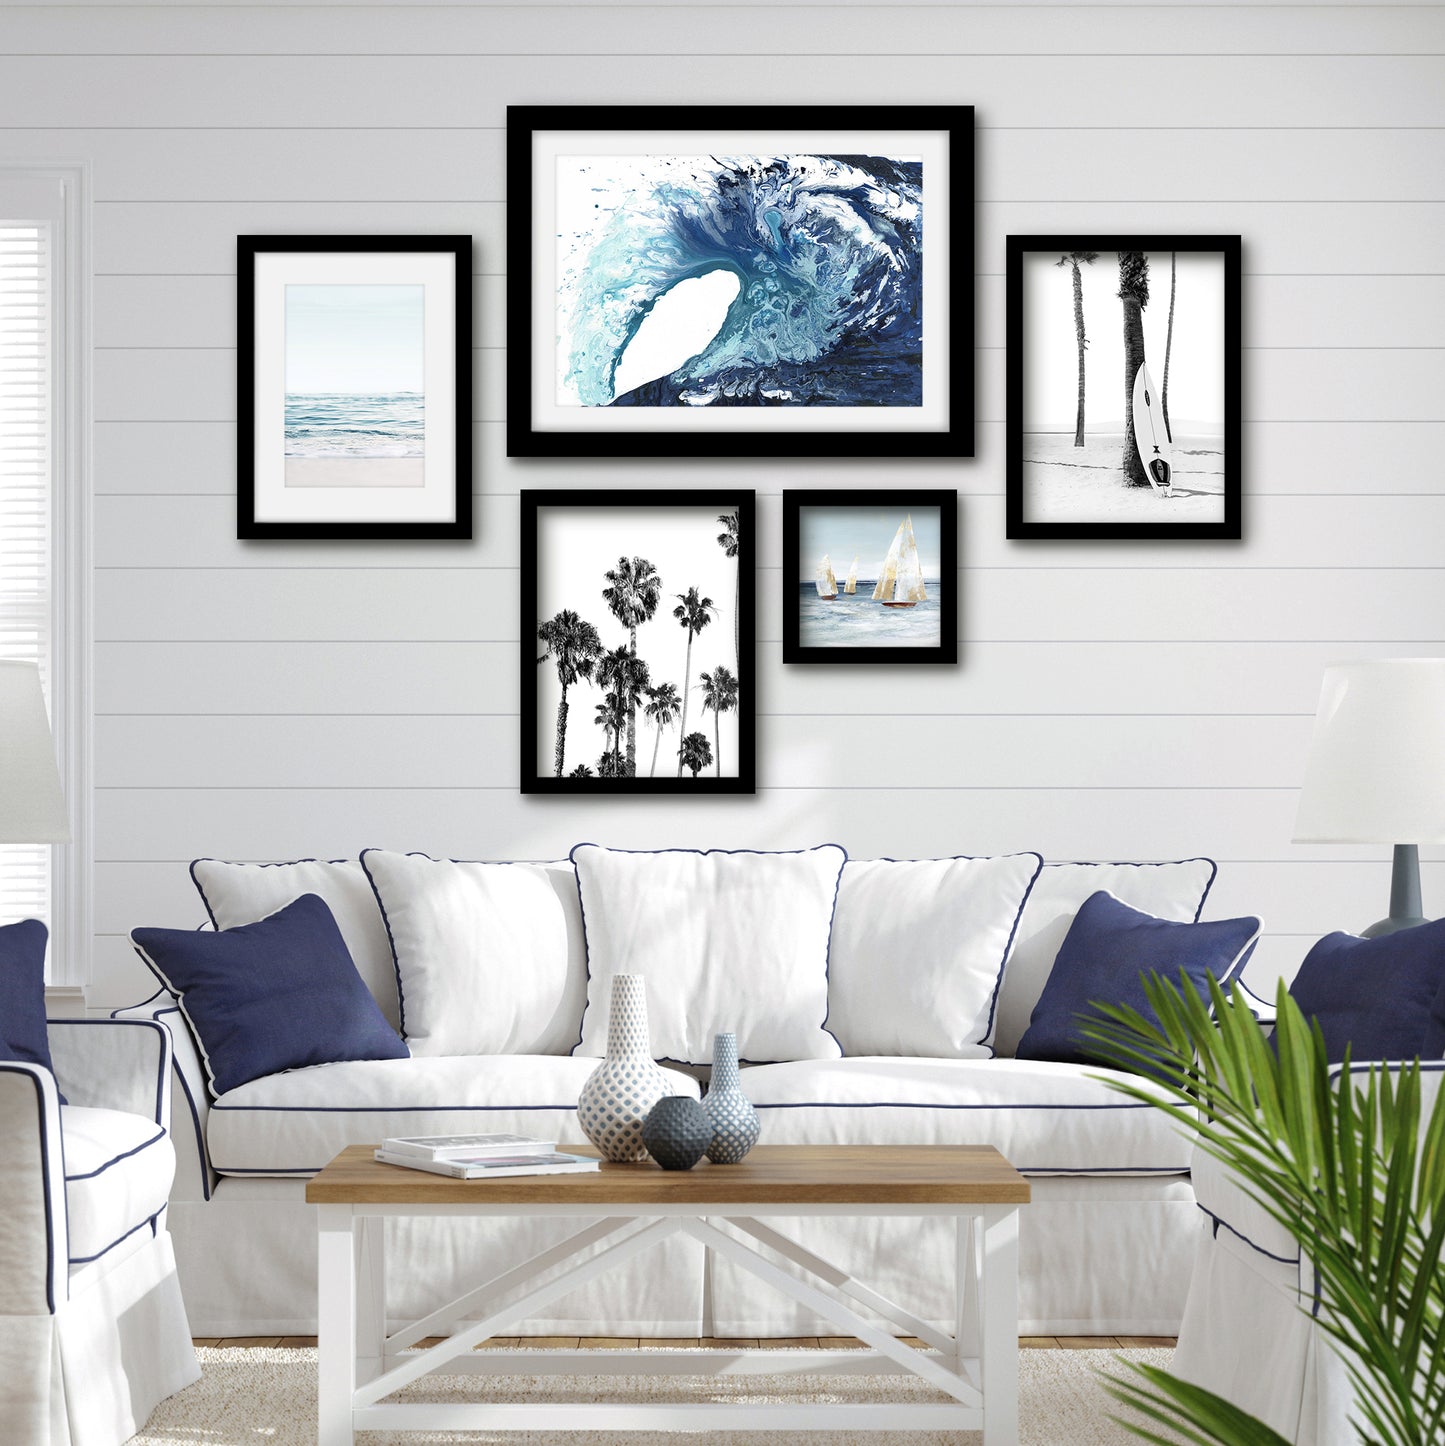 Americanflat 5 Piece Black Framed Gallery Wall Art Set - Blue Ocean Surf Boat